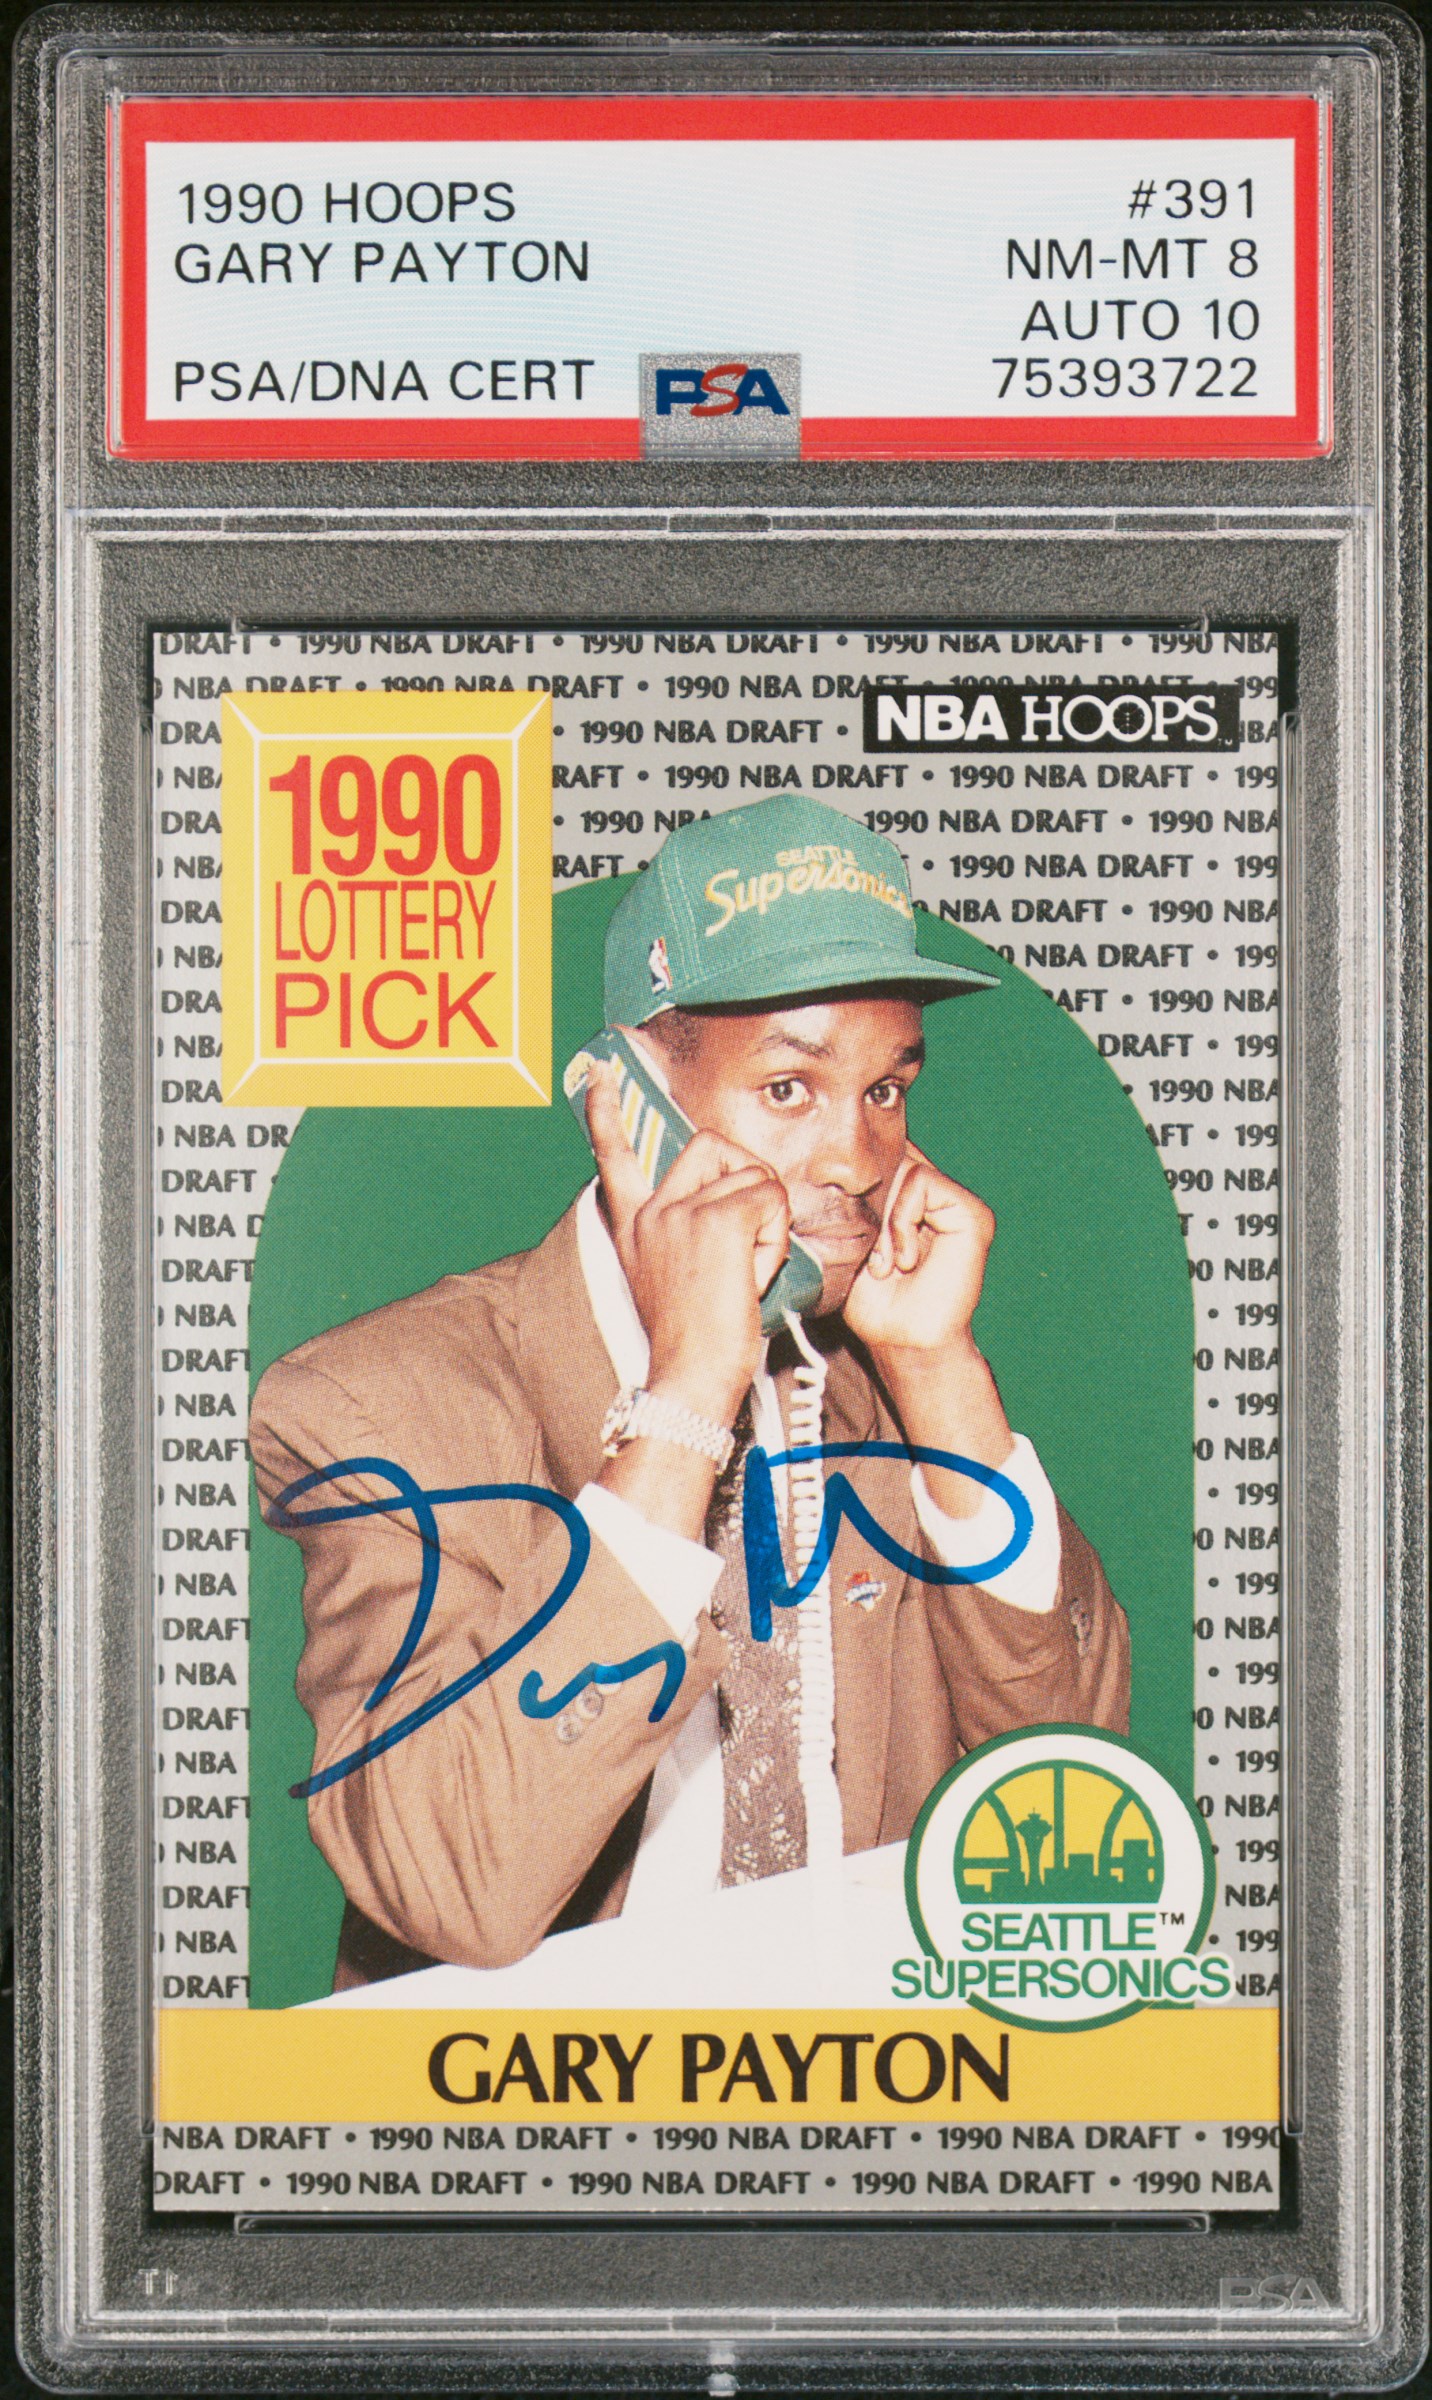 Gary Payton 1990 Hoops Signed Basketball Rookie Card #391 Auto PSA 10 75393722